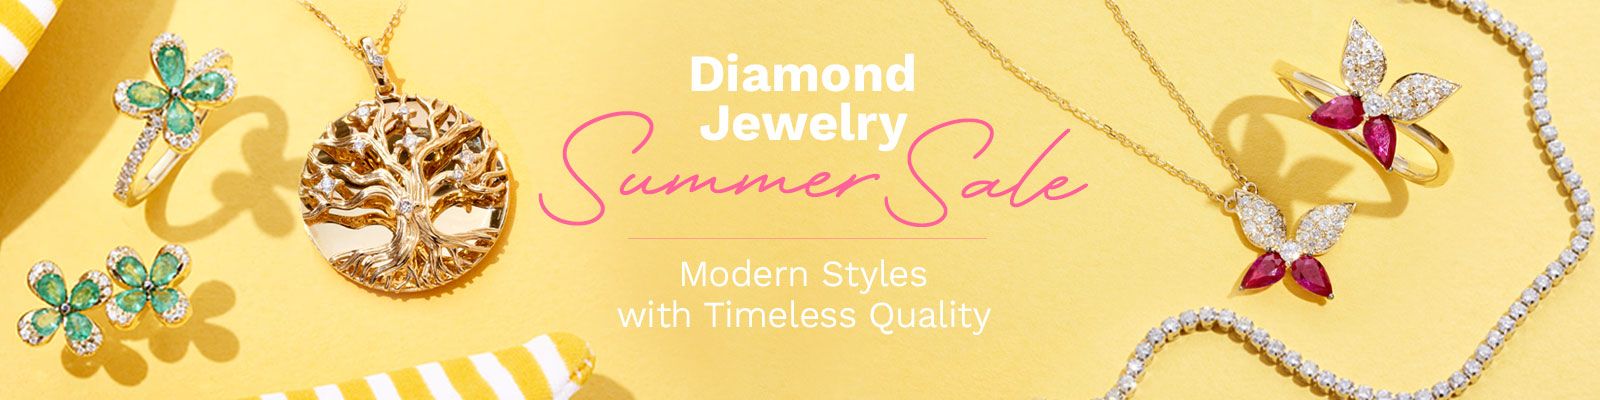 Diamond Jewelry Summer Sale 207-025, 207-023, 207-026, 207-022, 206-198, 204-194